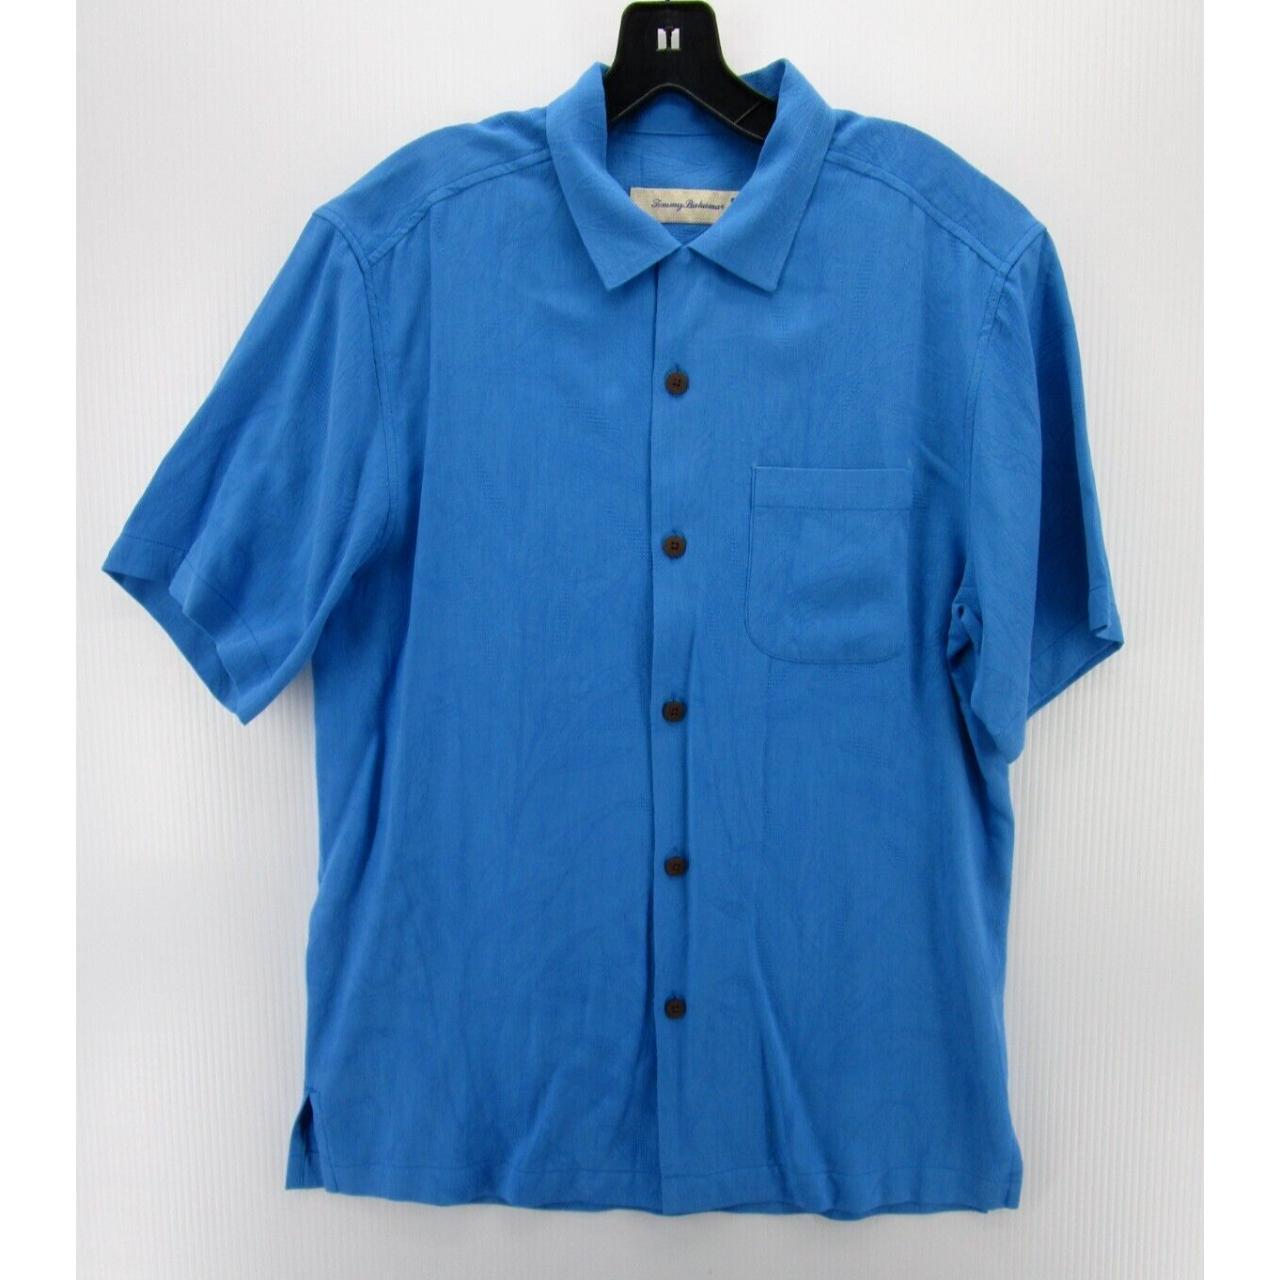 Tommy Bahama Men's Shirt - Blue - S